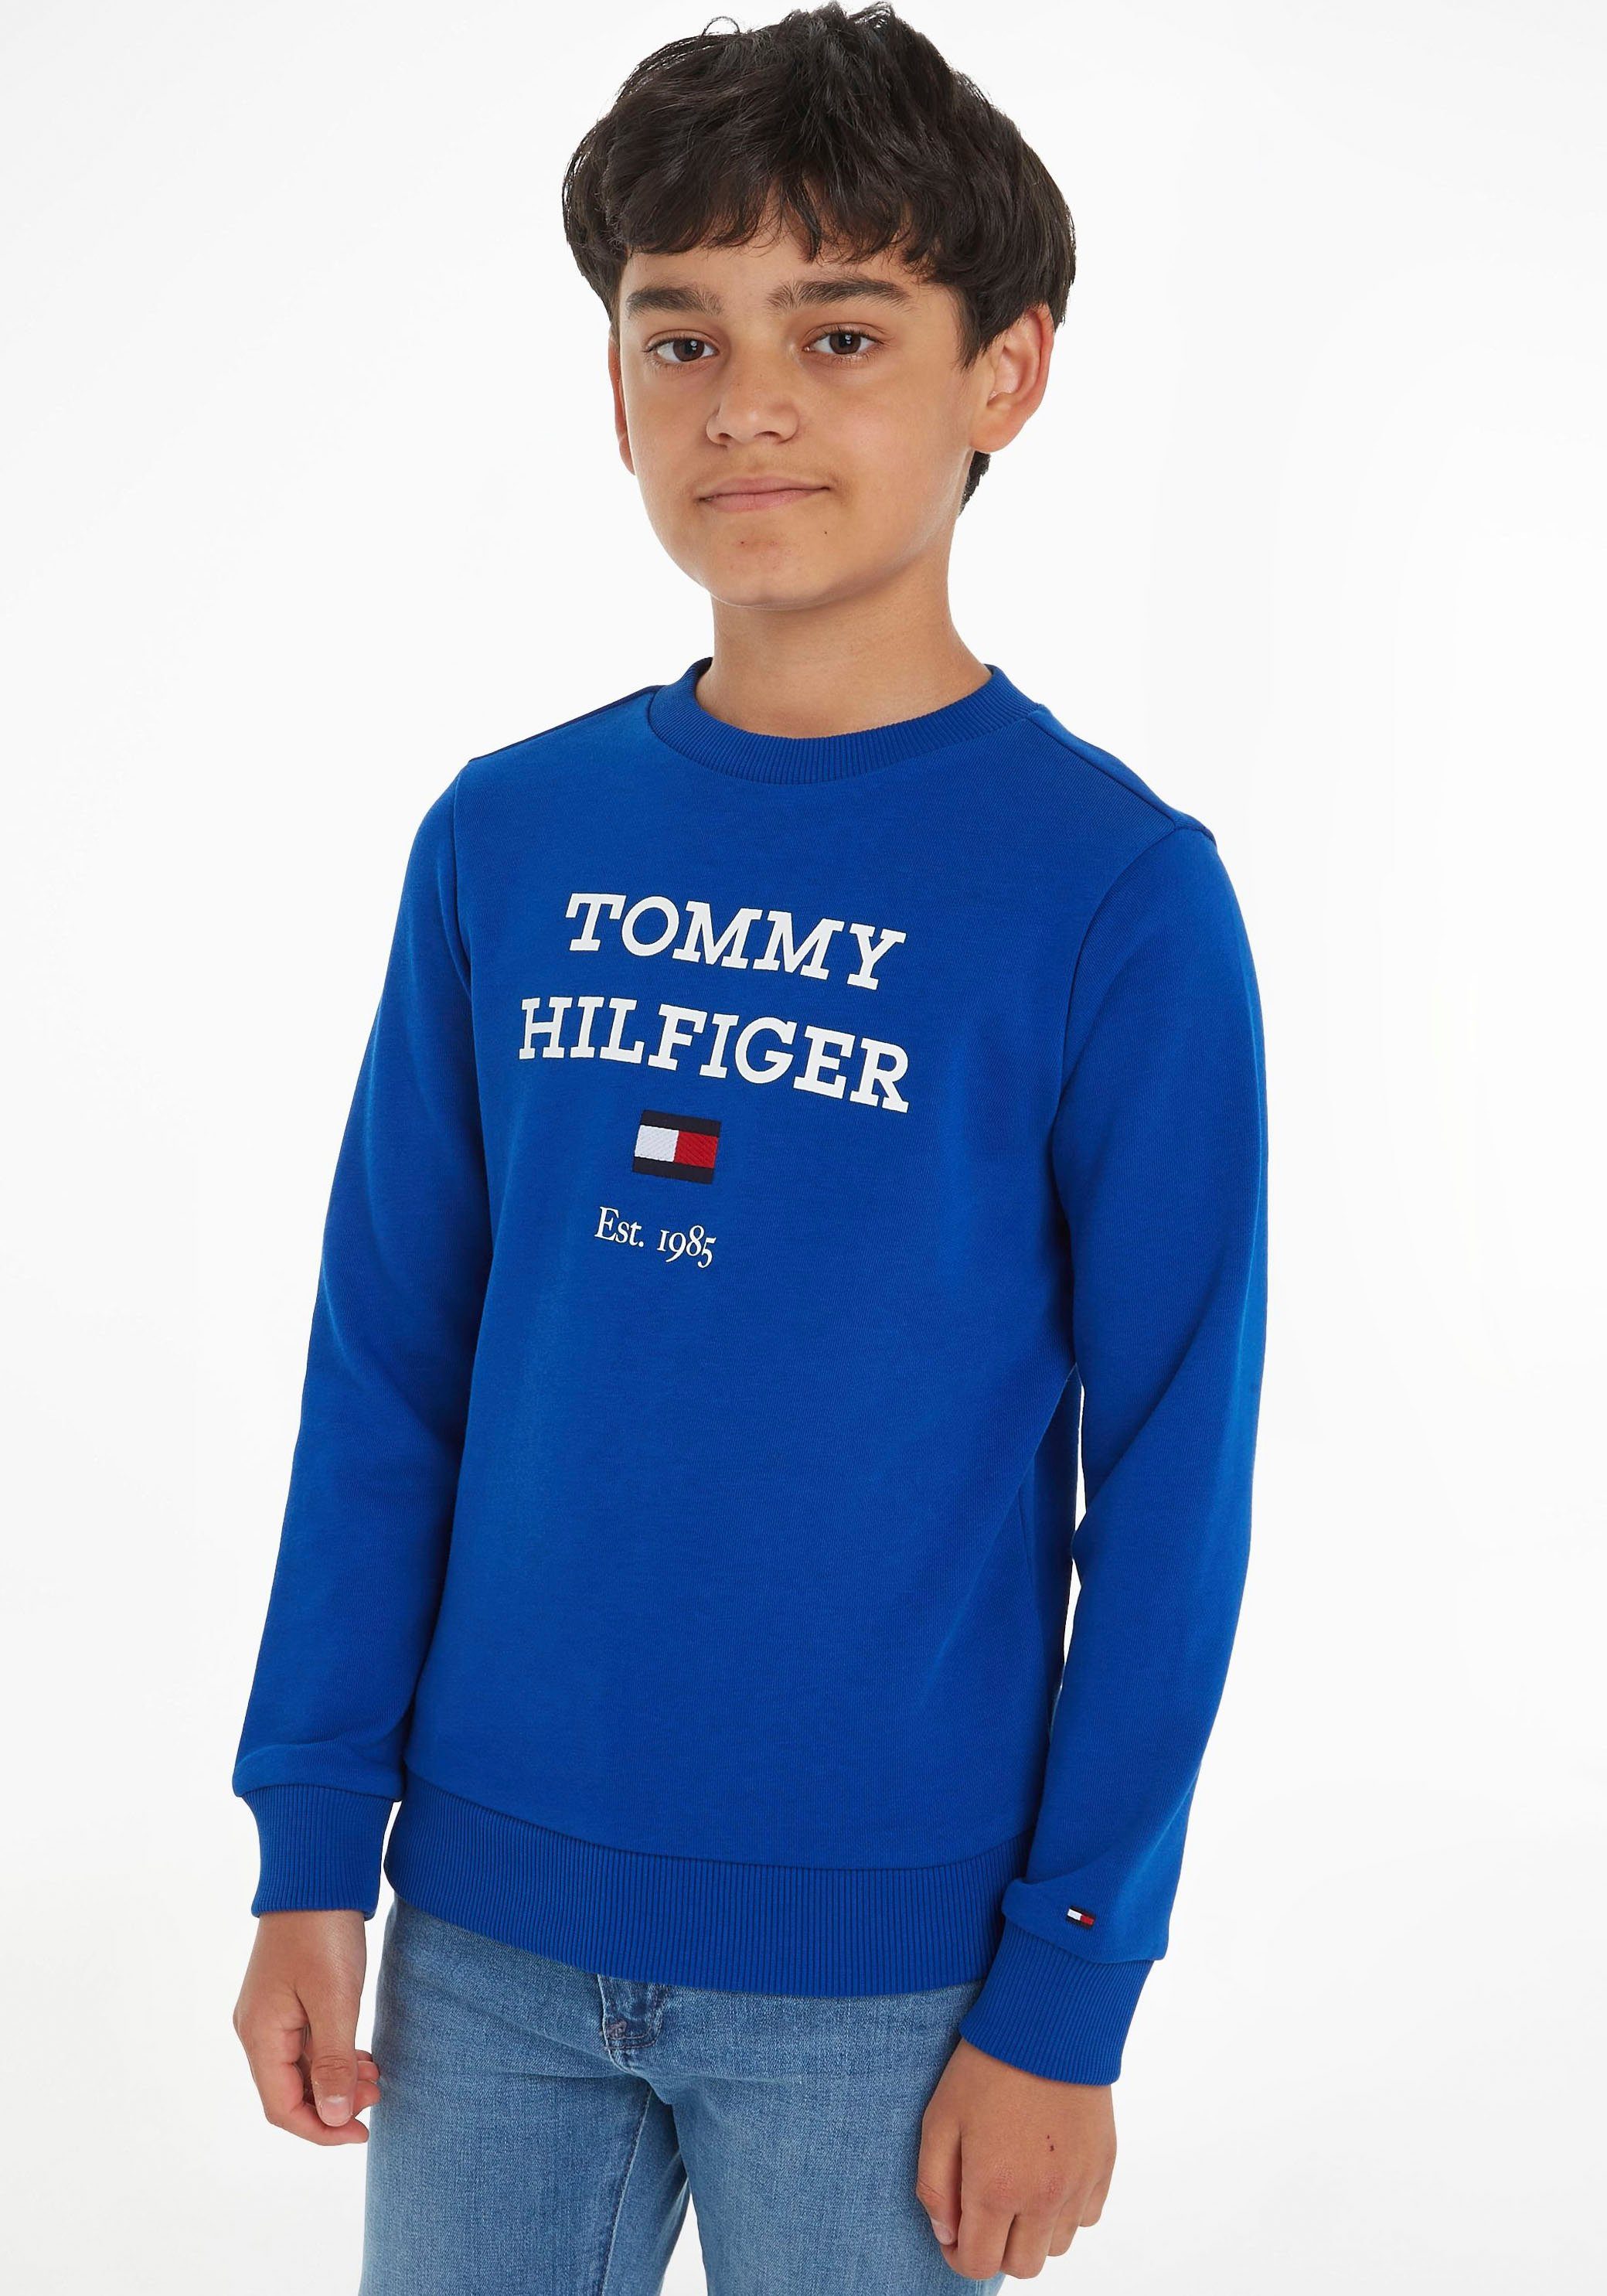 ultra Logo Hilfiger TH mit LOGO großem Tommy blue Sweatshirt SWEATSHIRT